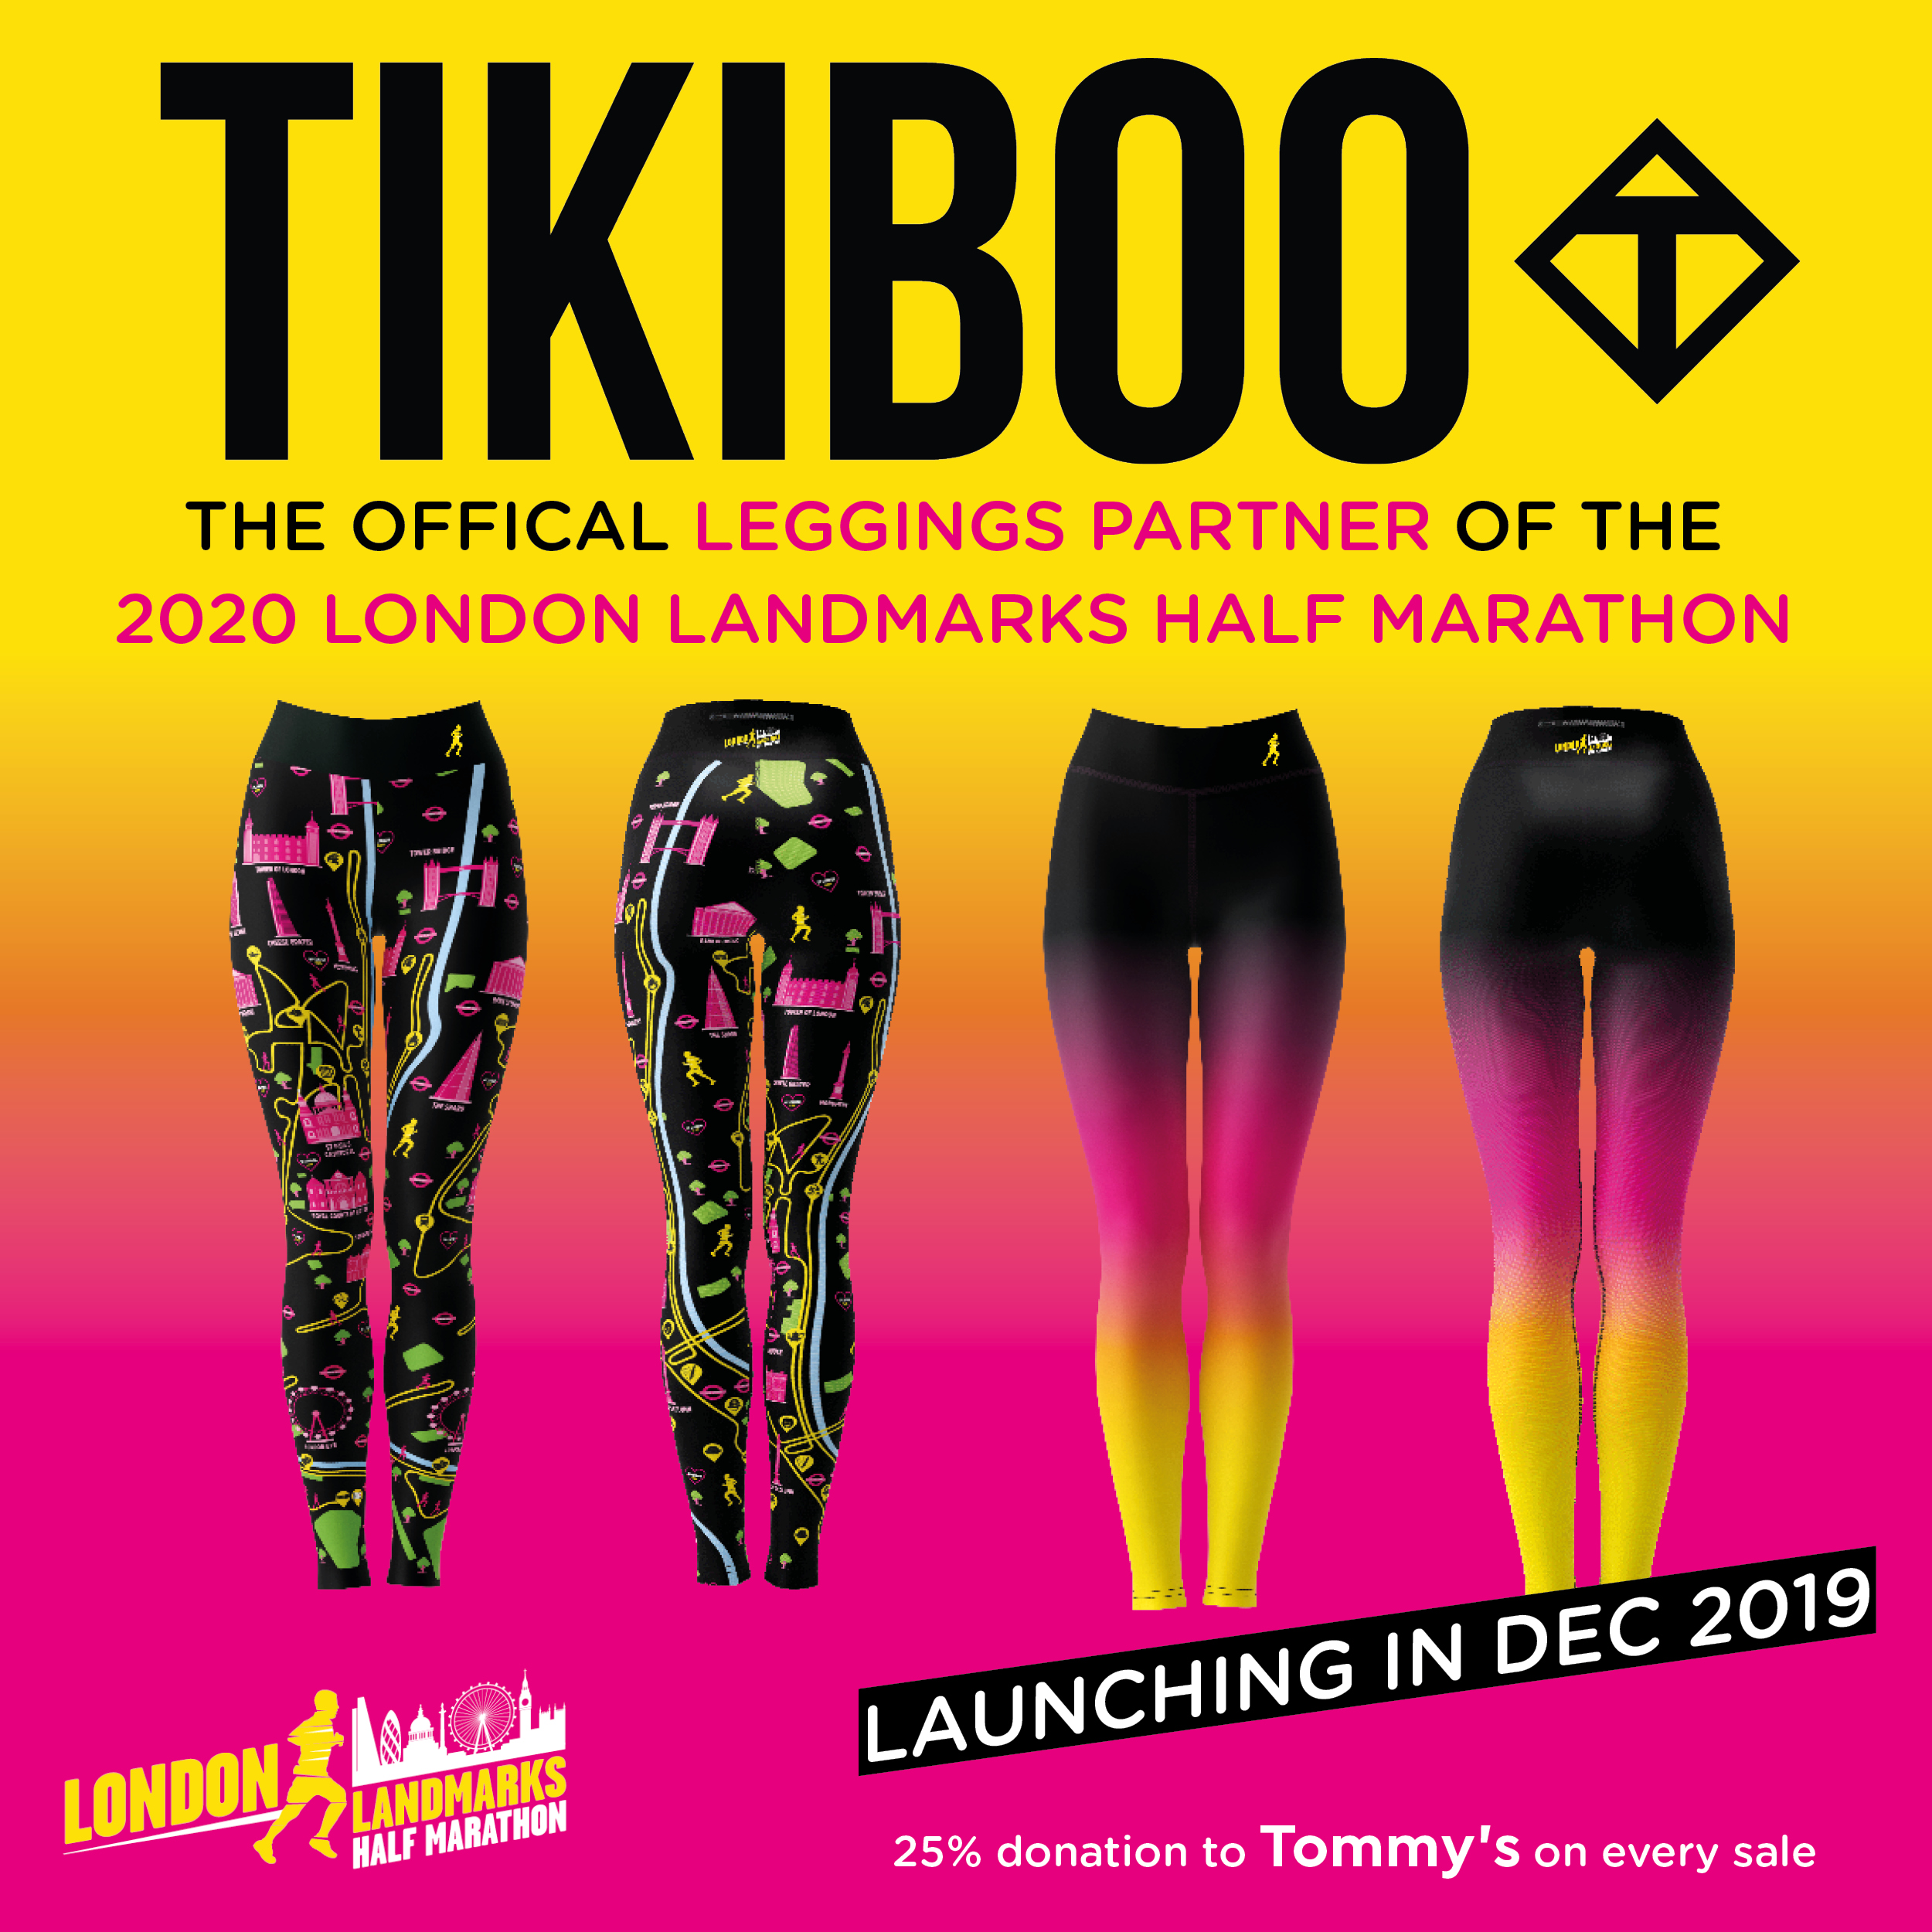 Tikiboo Leggings for London Landmarks Half Marathon December 2019